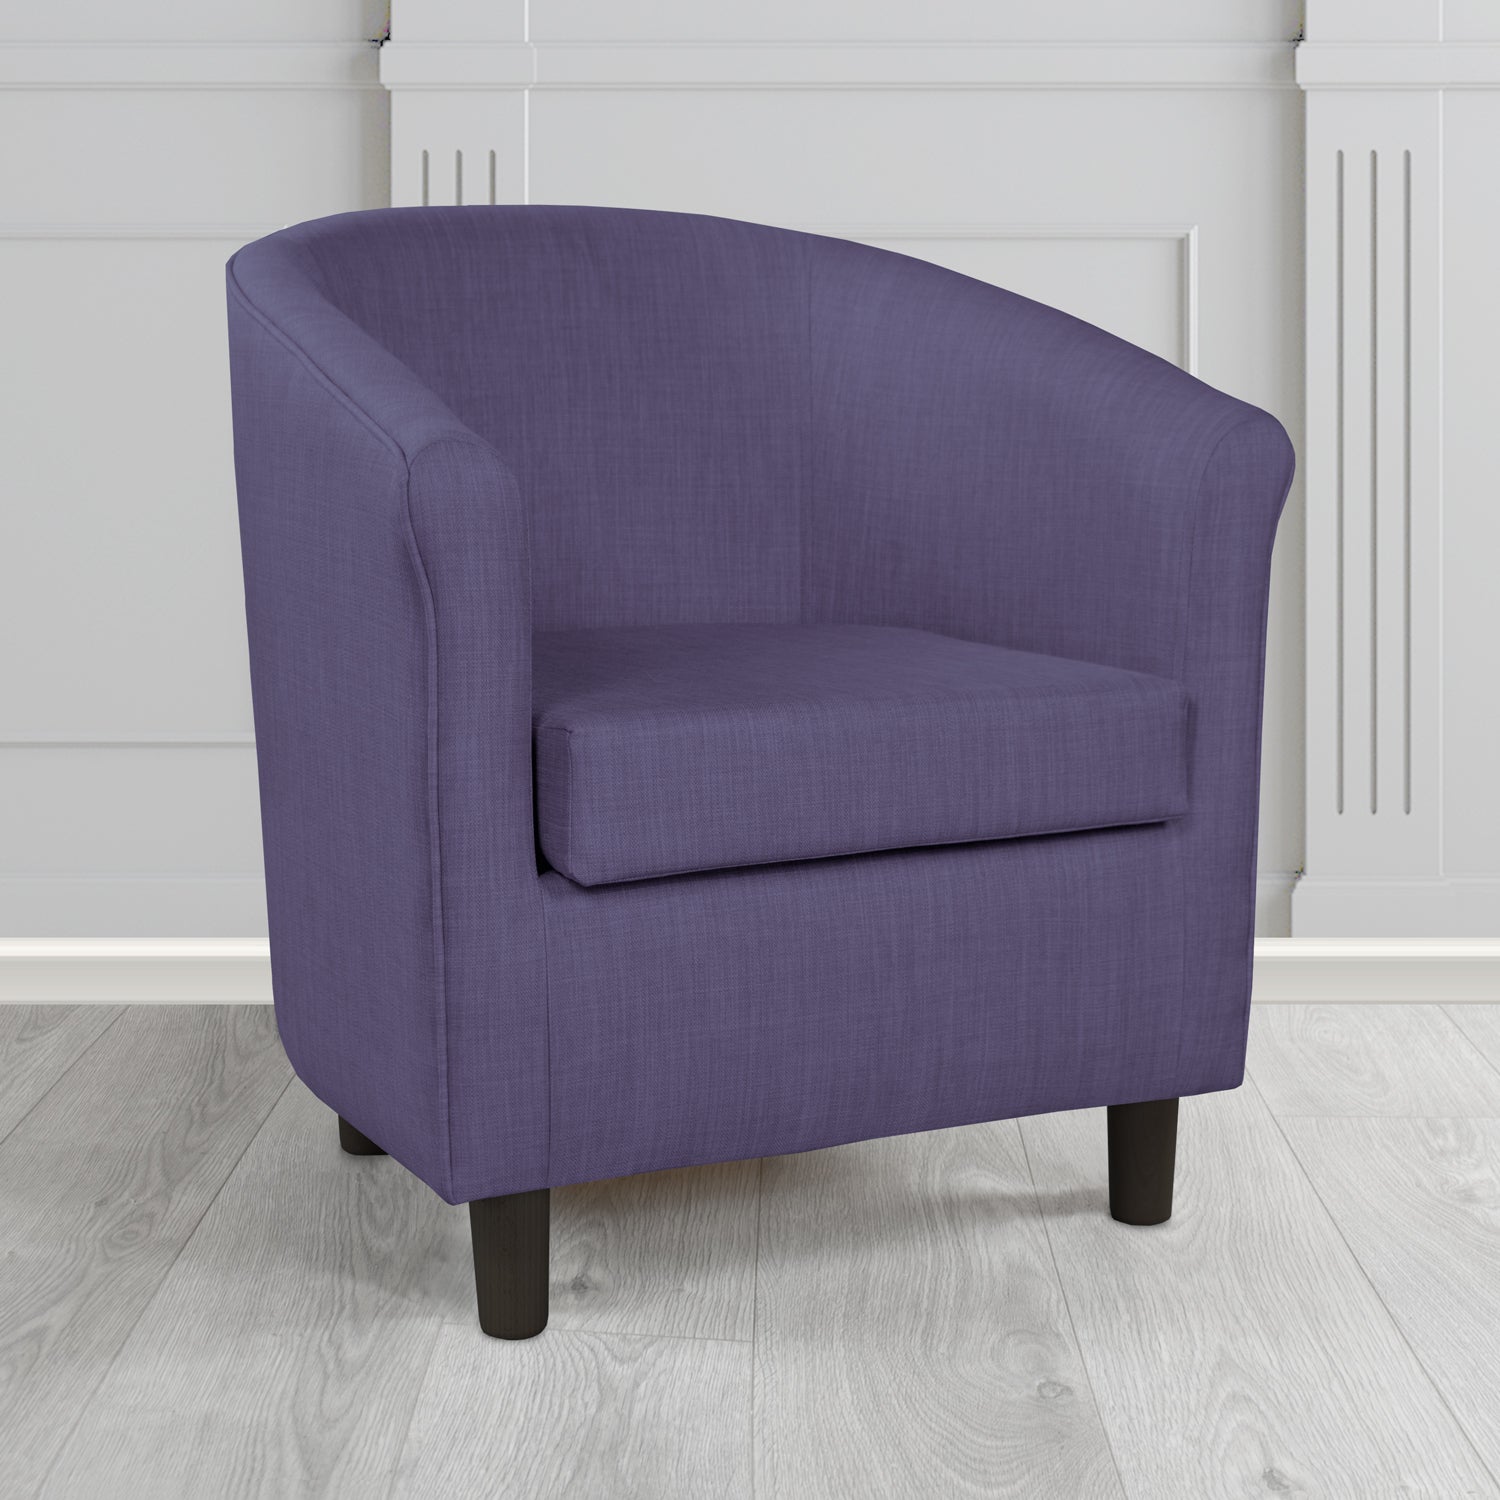 Tuscany Charles Purple Plain Linen Fabric Tub Chair - The Tub Chair Shop